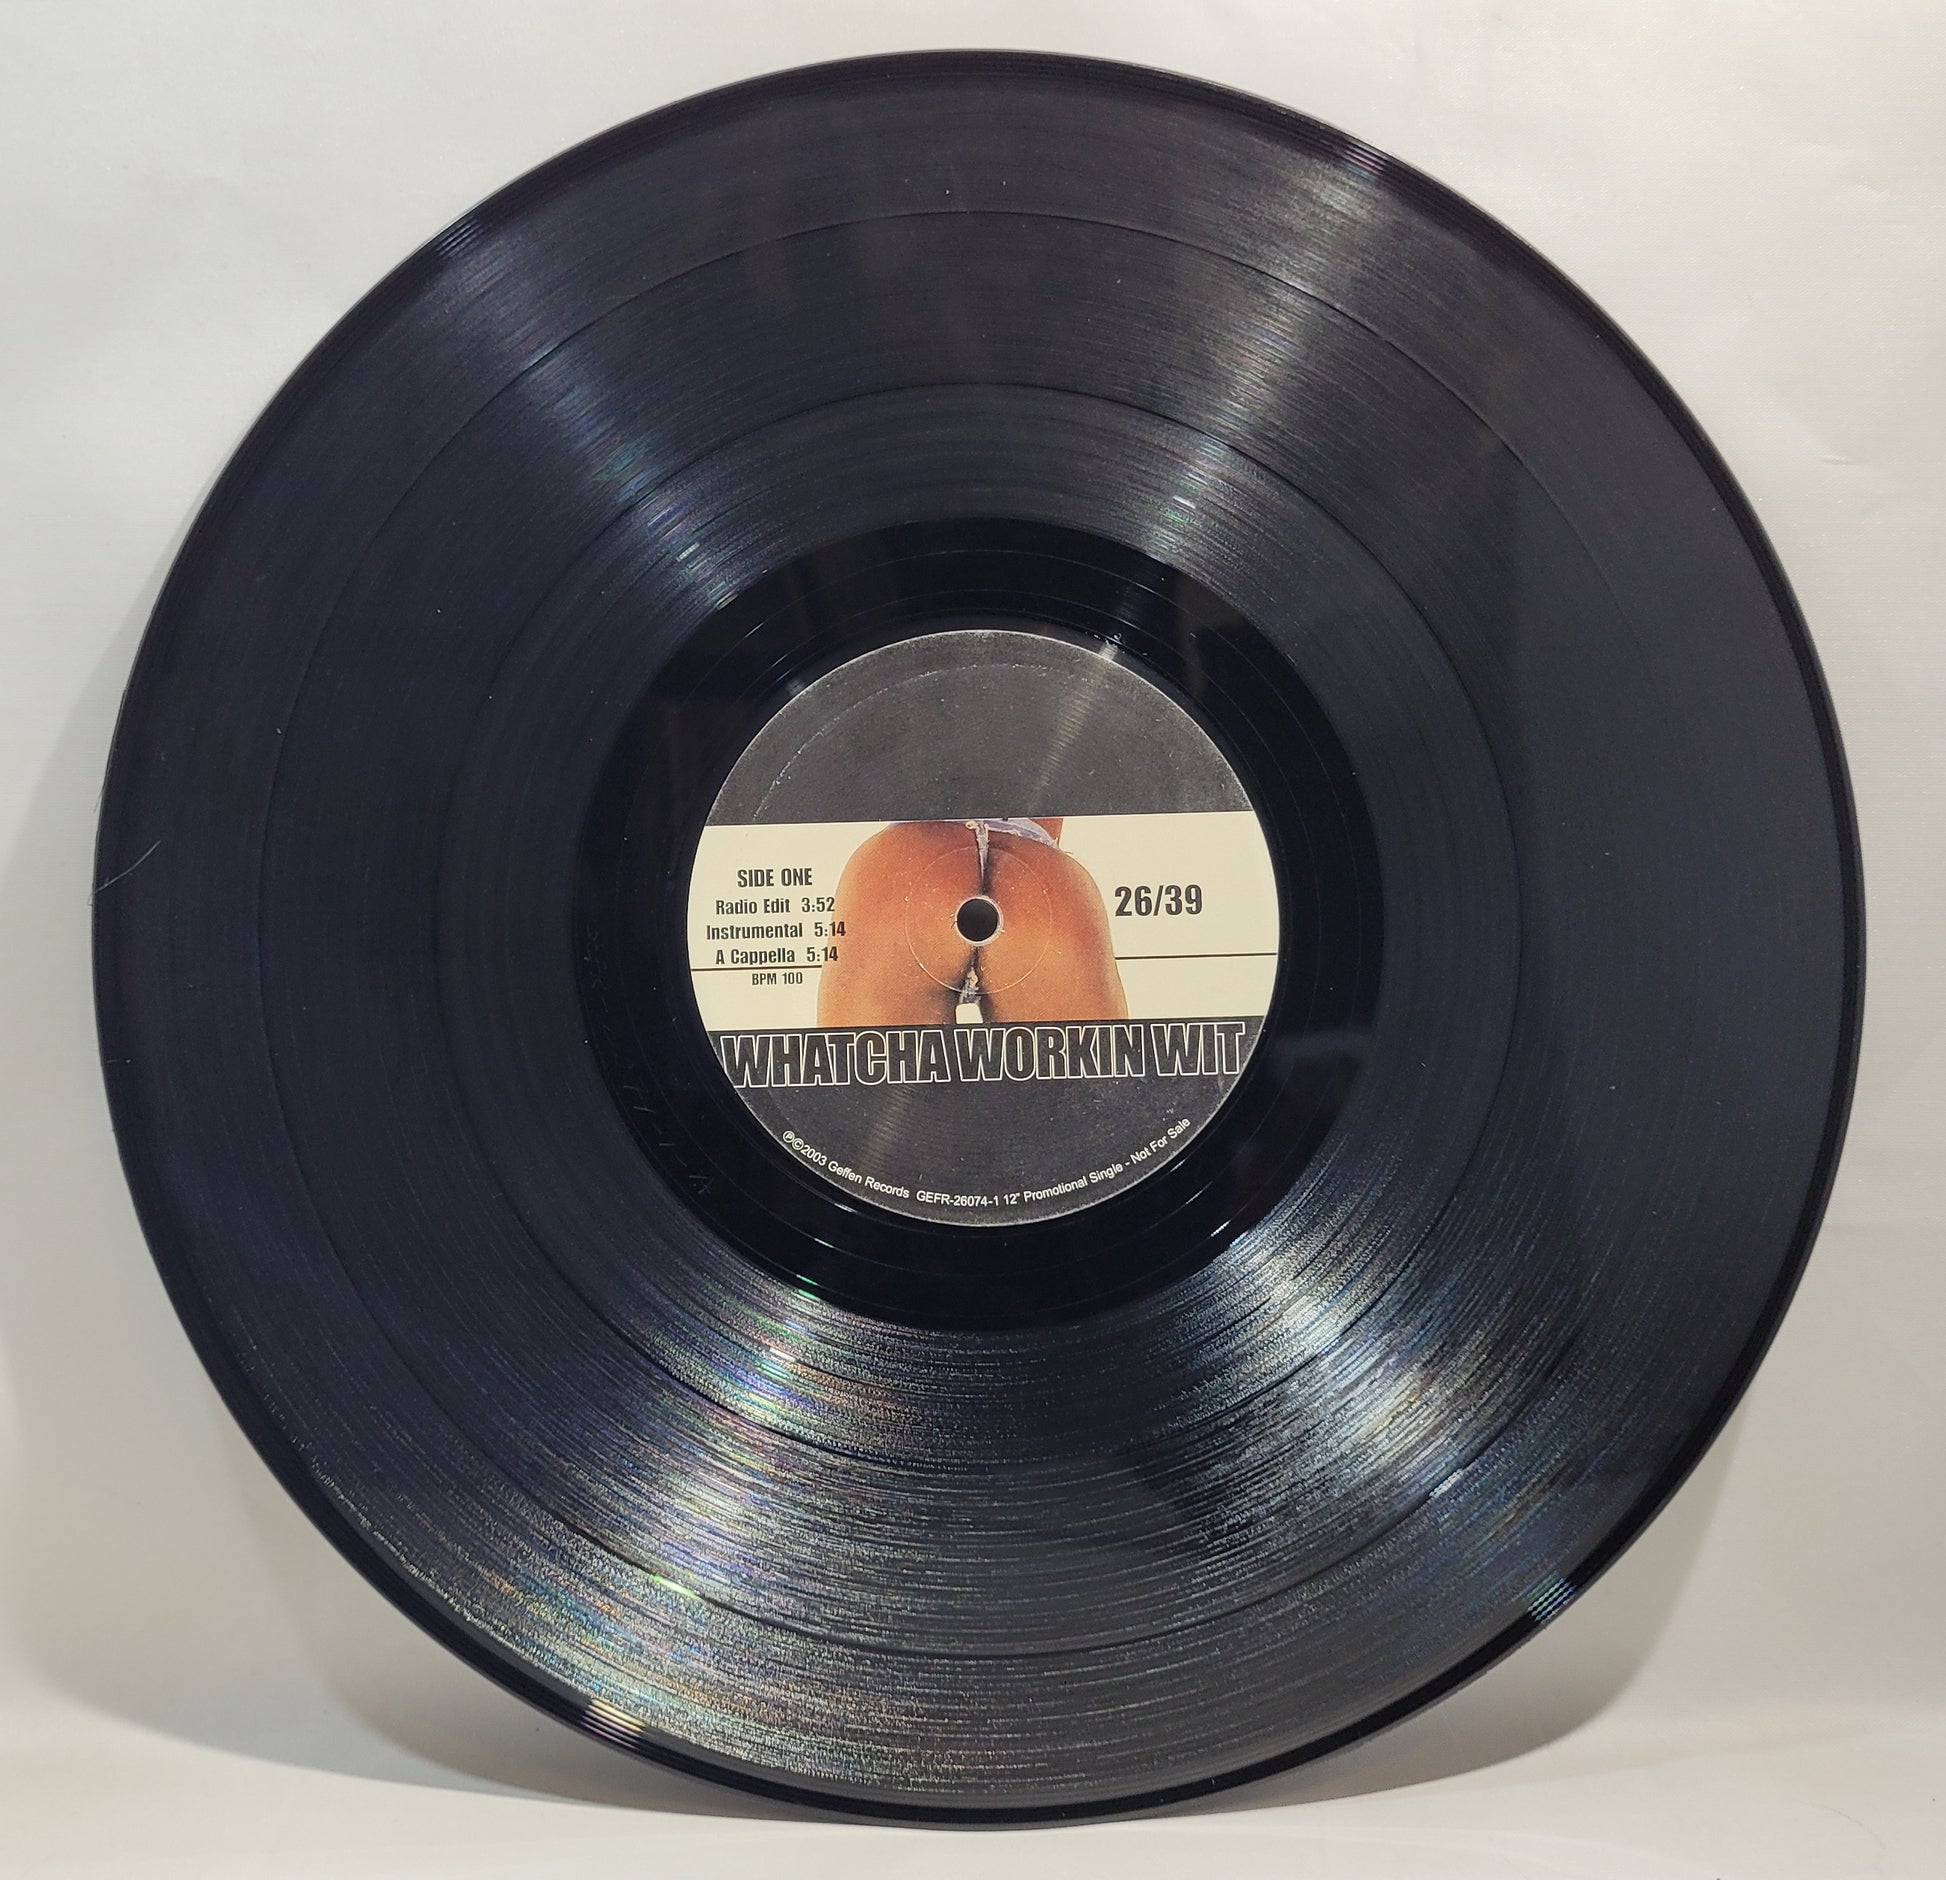 Bosstown - Whatcha Workin Wit [Promo] [Vinyl Record 12" Single]